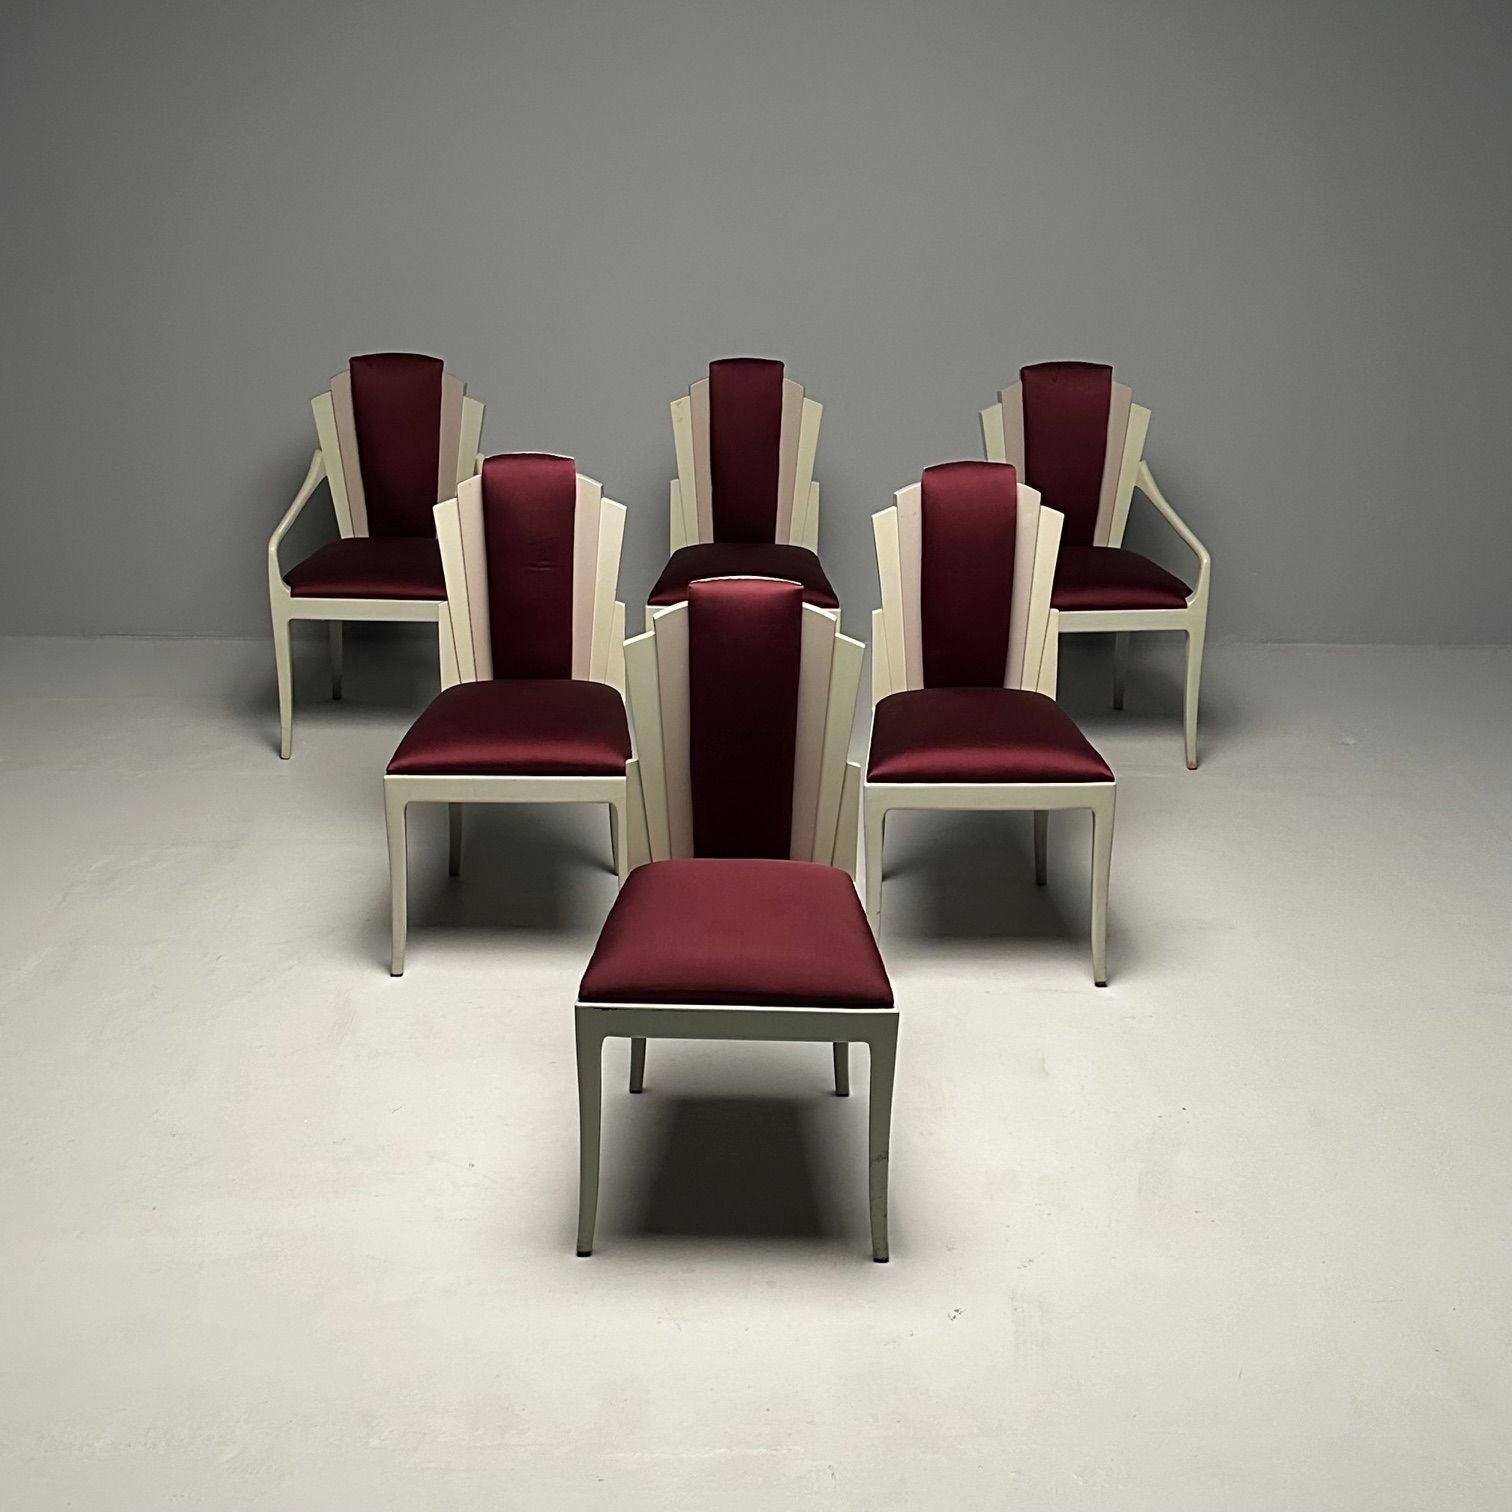 American Vladimir Kagan Mid-Century Modern, Six Eva Dining Chairs, Lacquer, Maroon Fabric For Sale